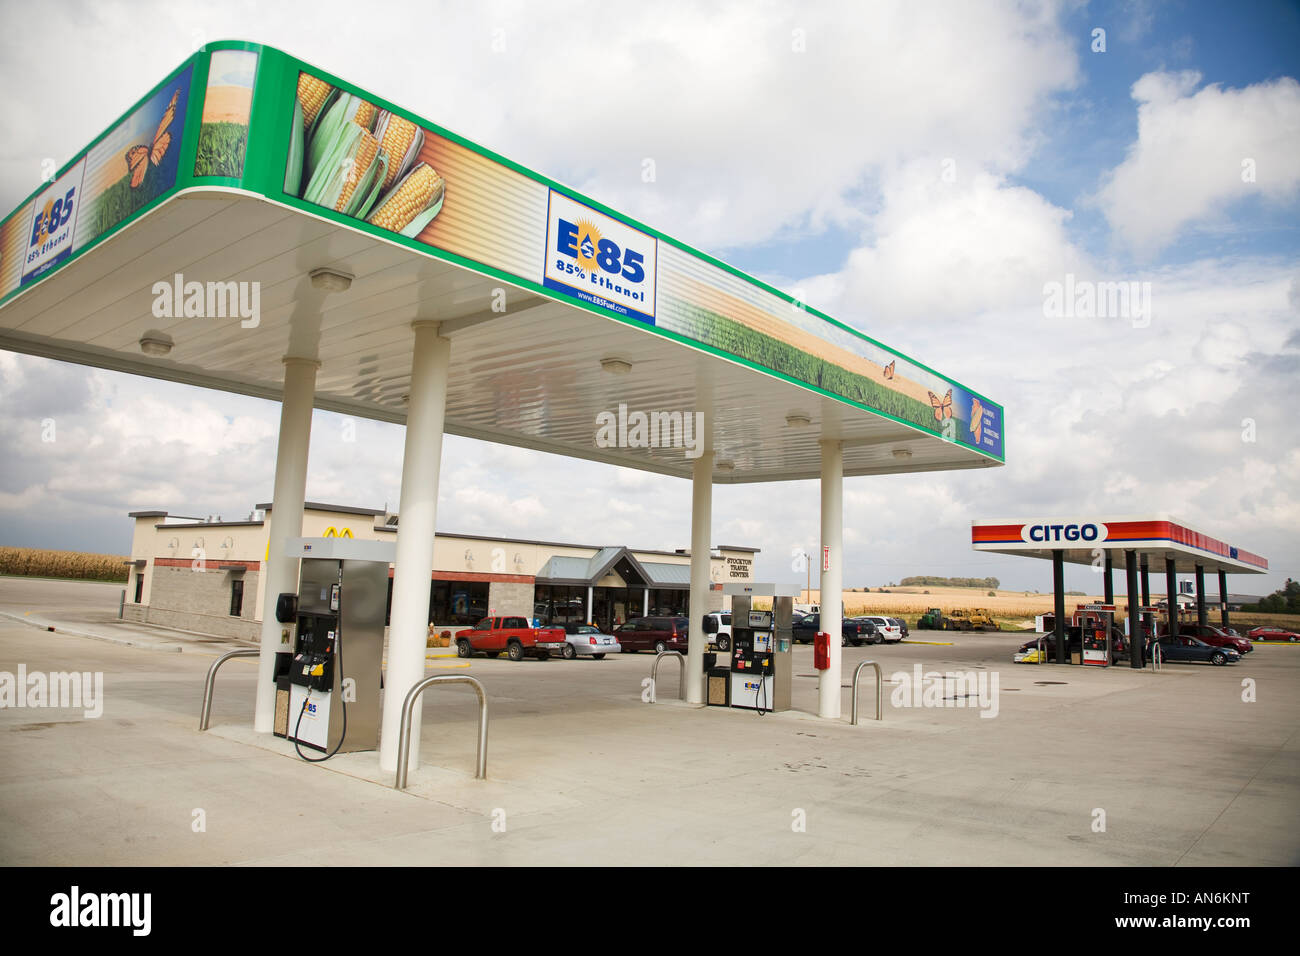 ILLINOIS Elizabeth E85 gasoline pump at service station alternative energy and regular gasoline options Citgo station corn field Stock Photo